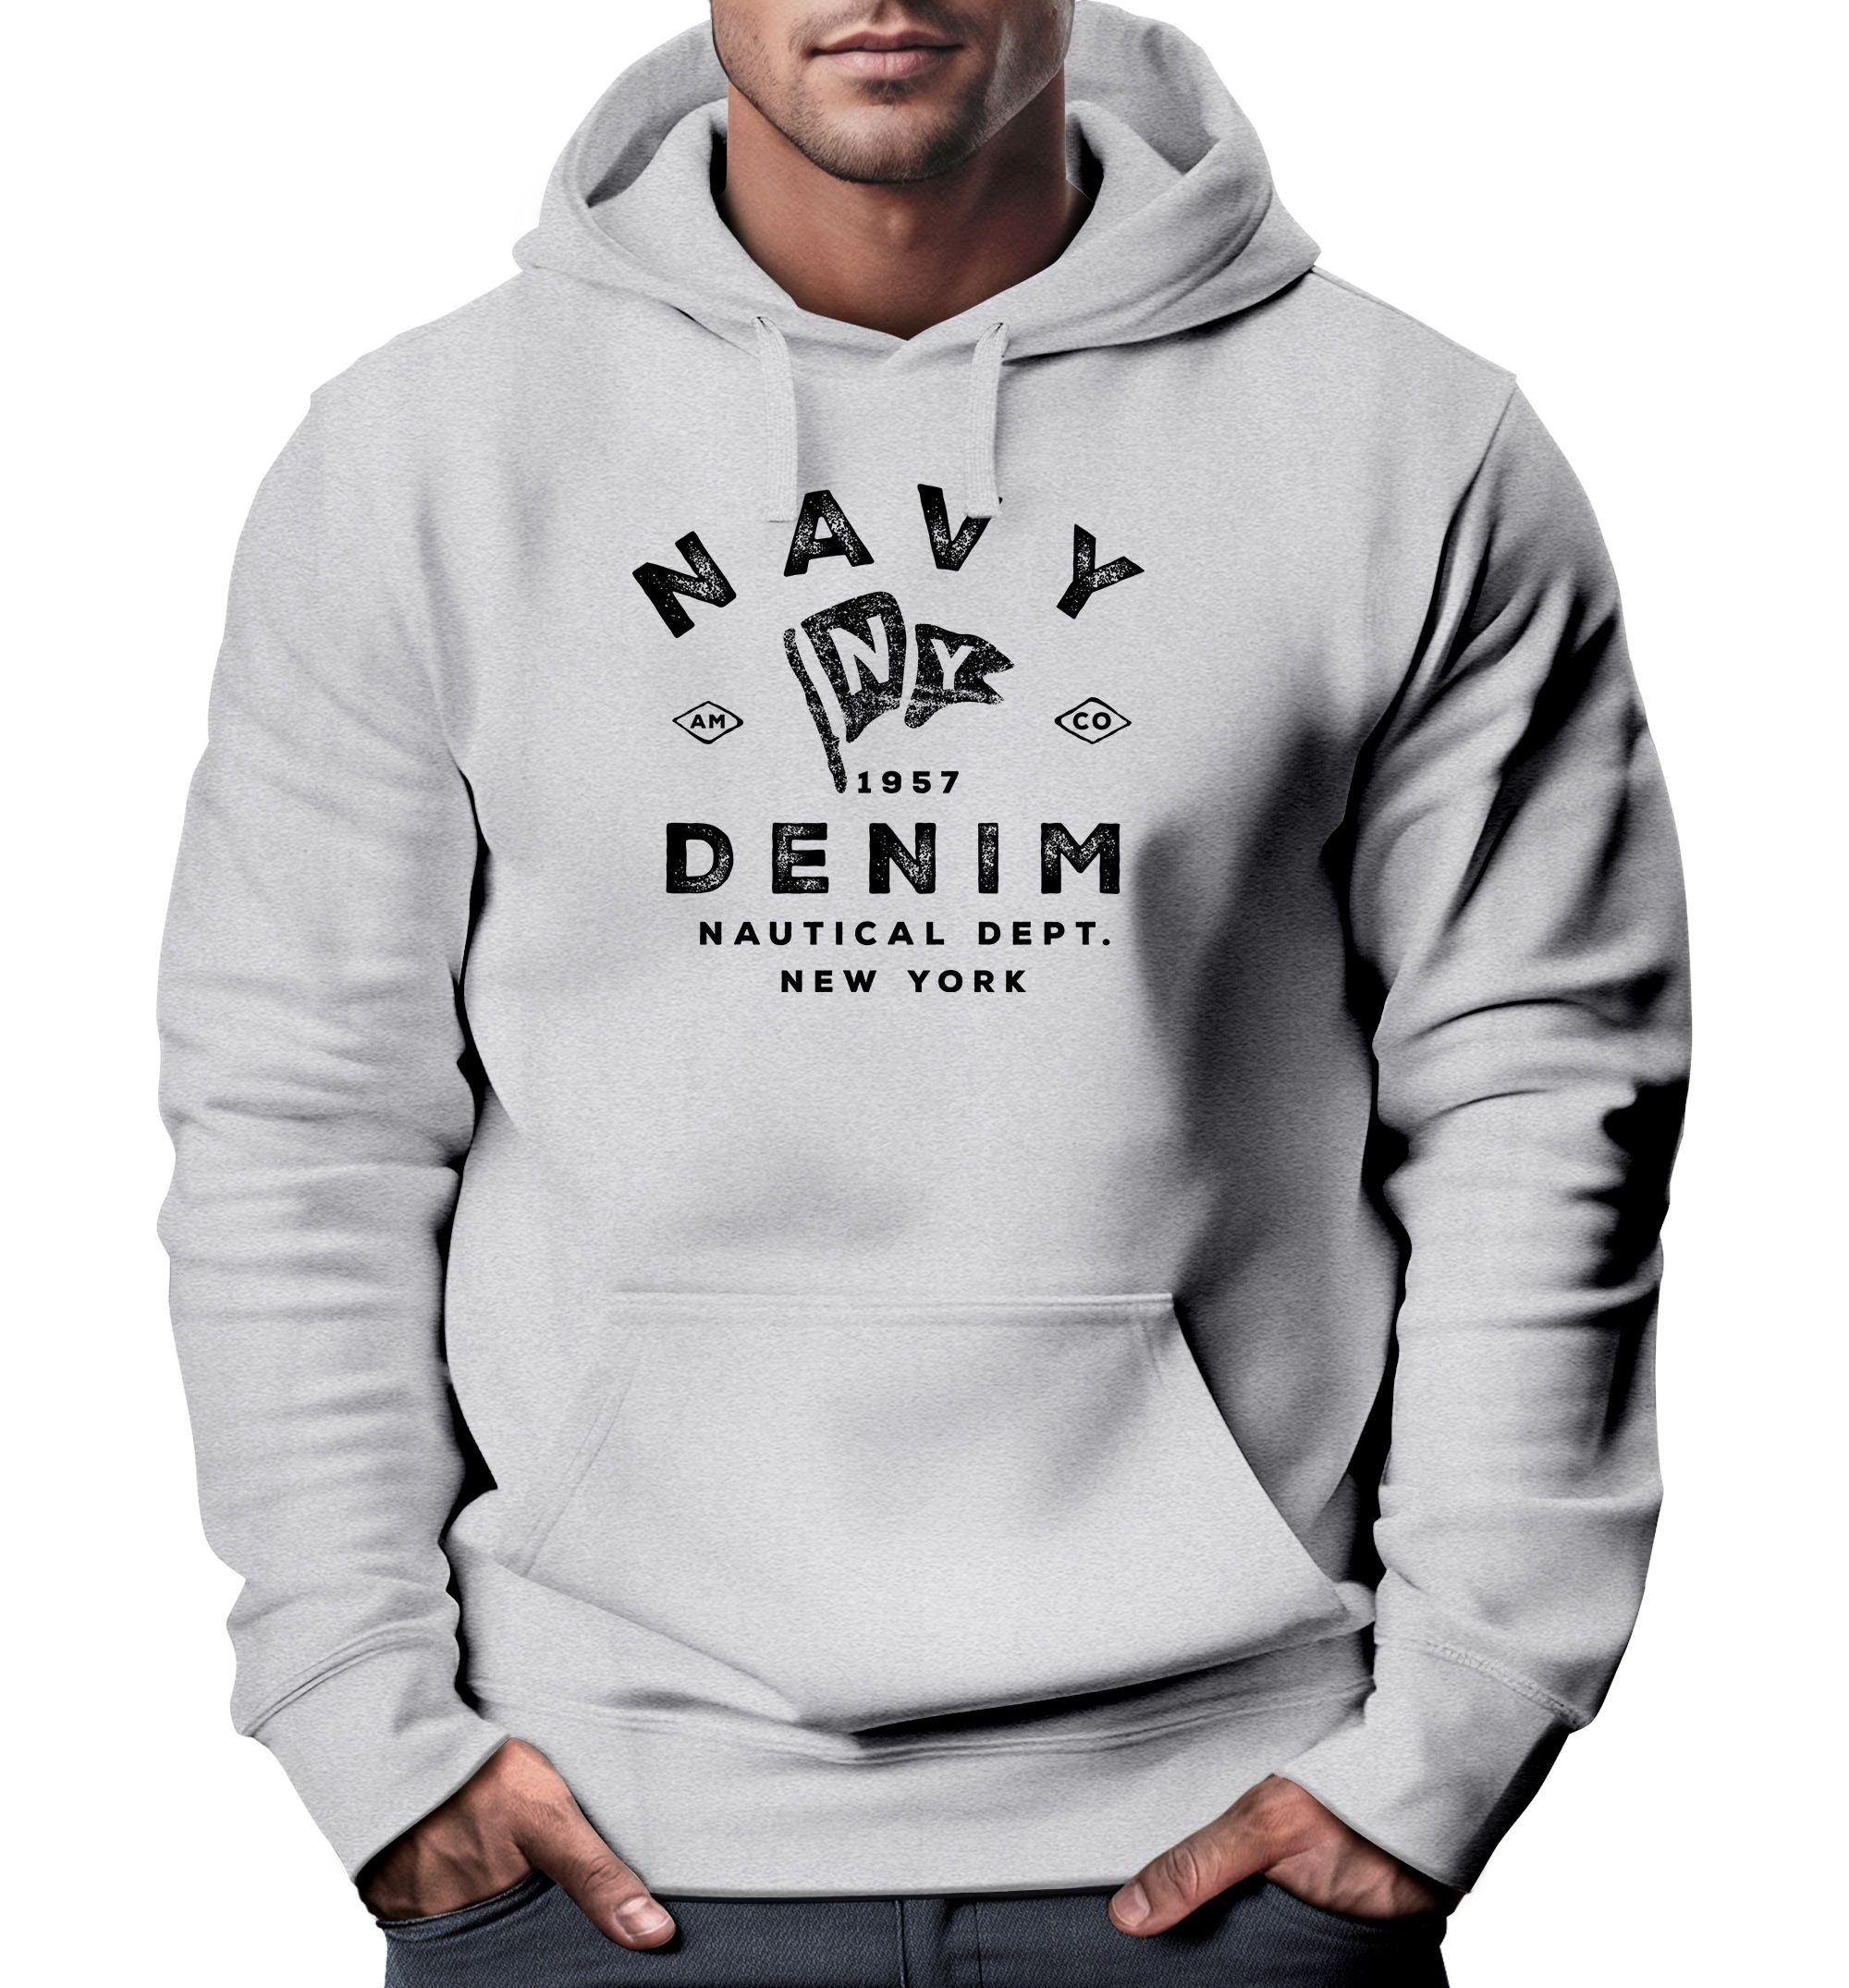 Neverless Hoodie Hoodie Herren vintage Motiv Schriftzug Navy Denim Nautical New York Kapuzen-Pullover MännerNeverless® grau